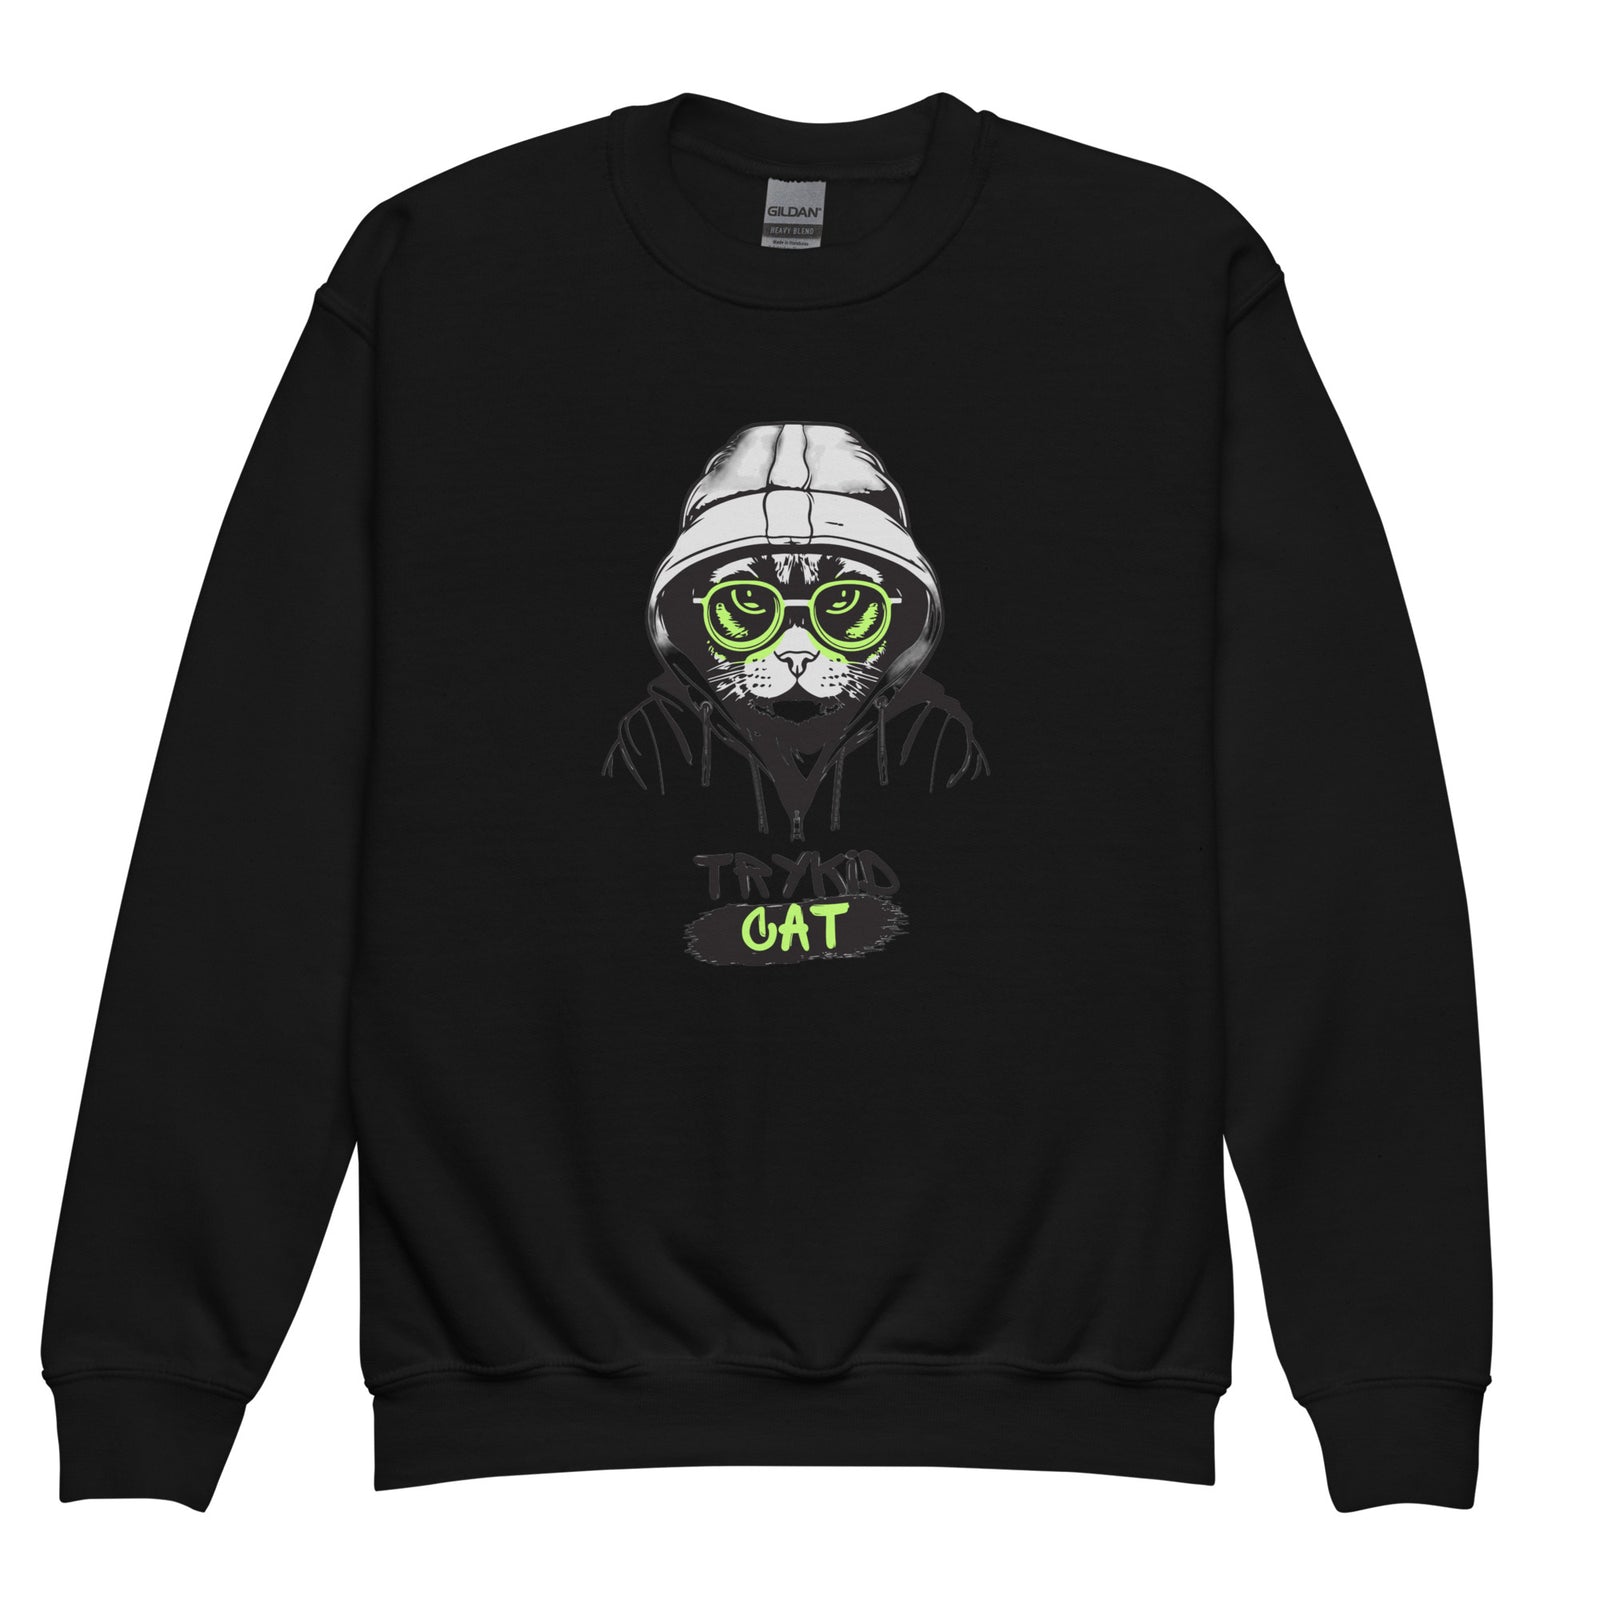 Youth crewneck sweatshirt - TryKid